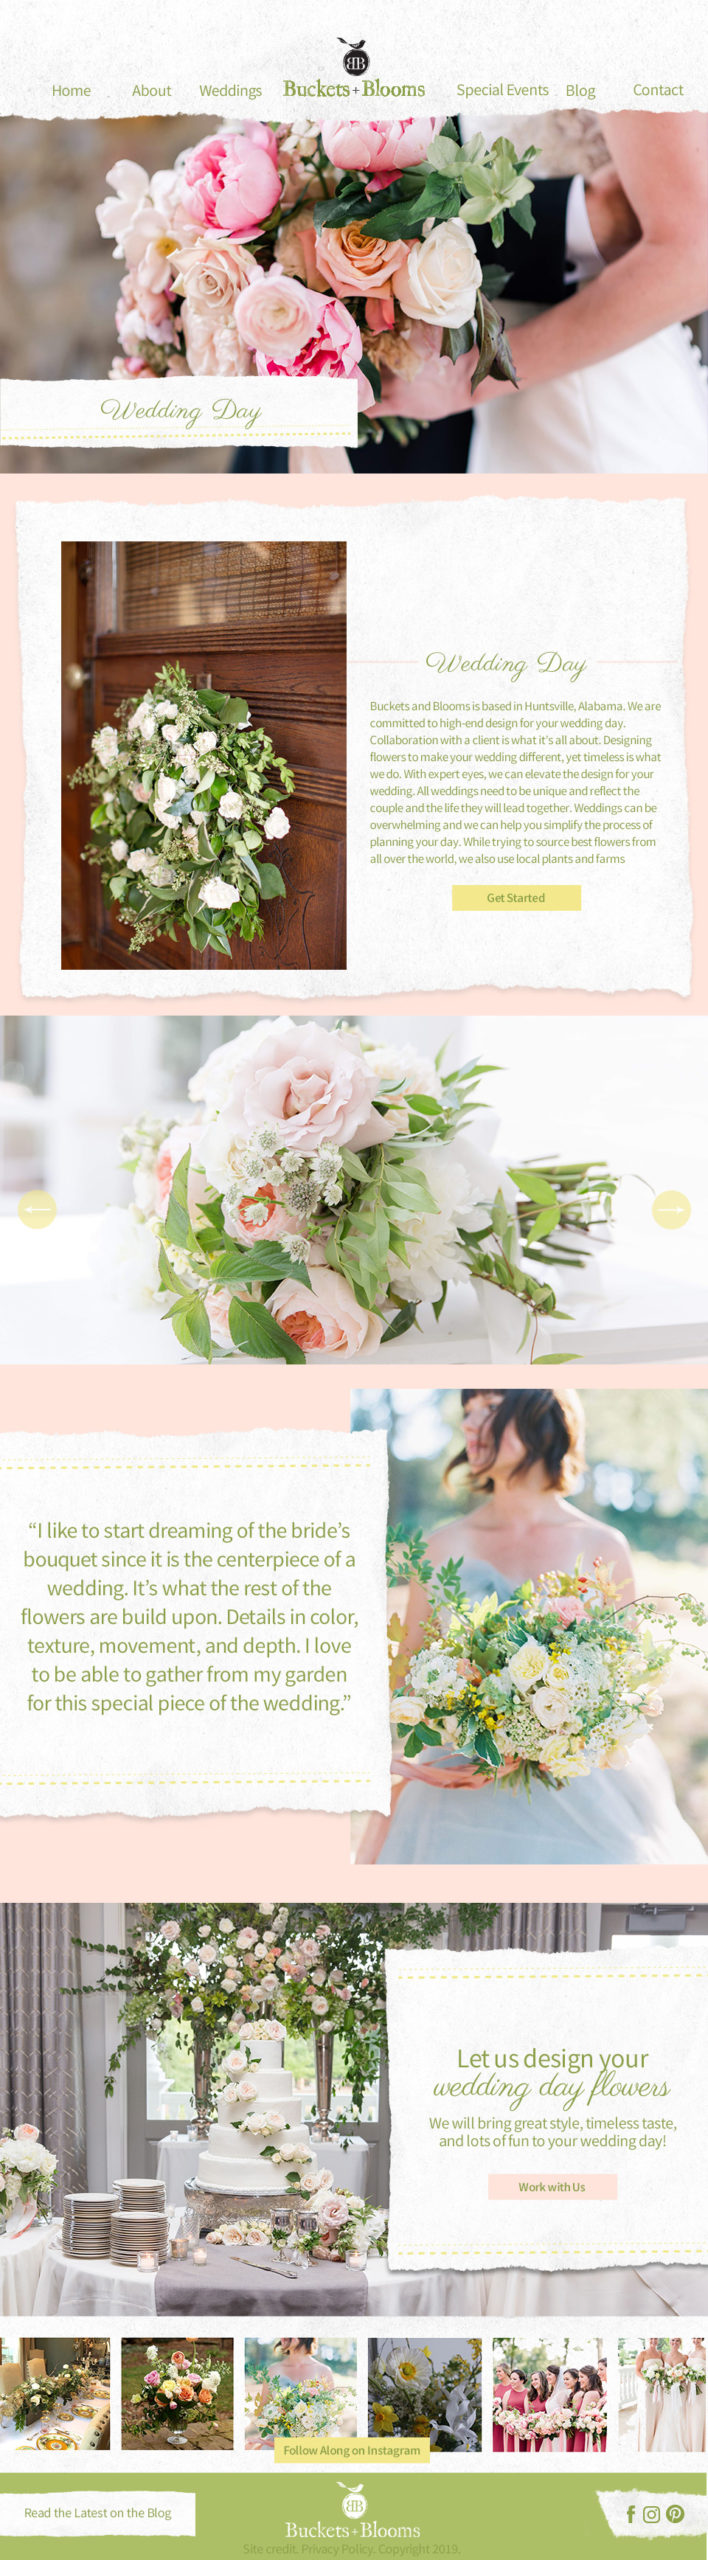 Website design for Buckets and Blooms by J. Alexandria Creative, Huntsville, Alabama branding and website designer. Website Wedding Day Interior Page Design. 